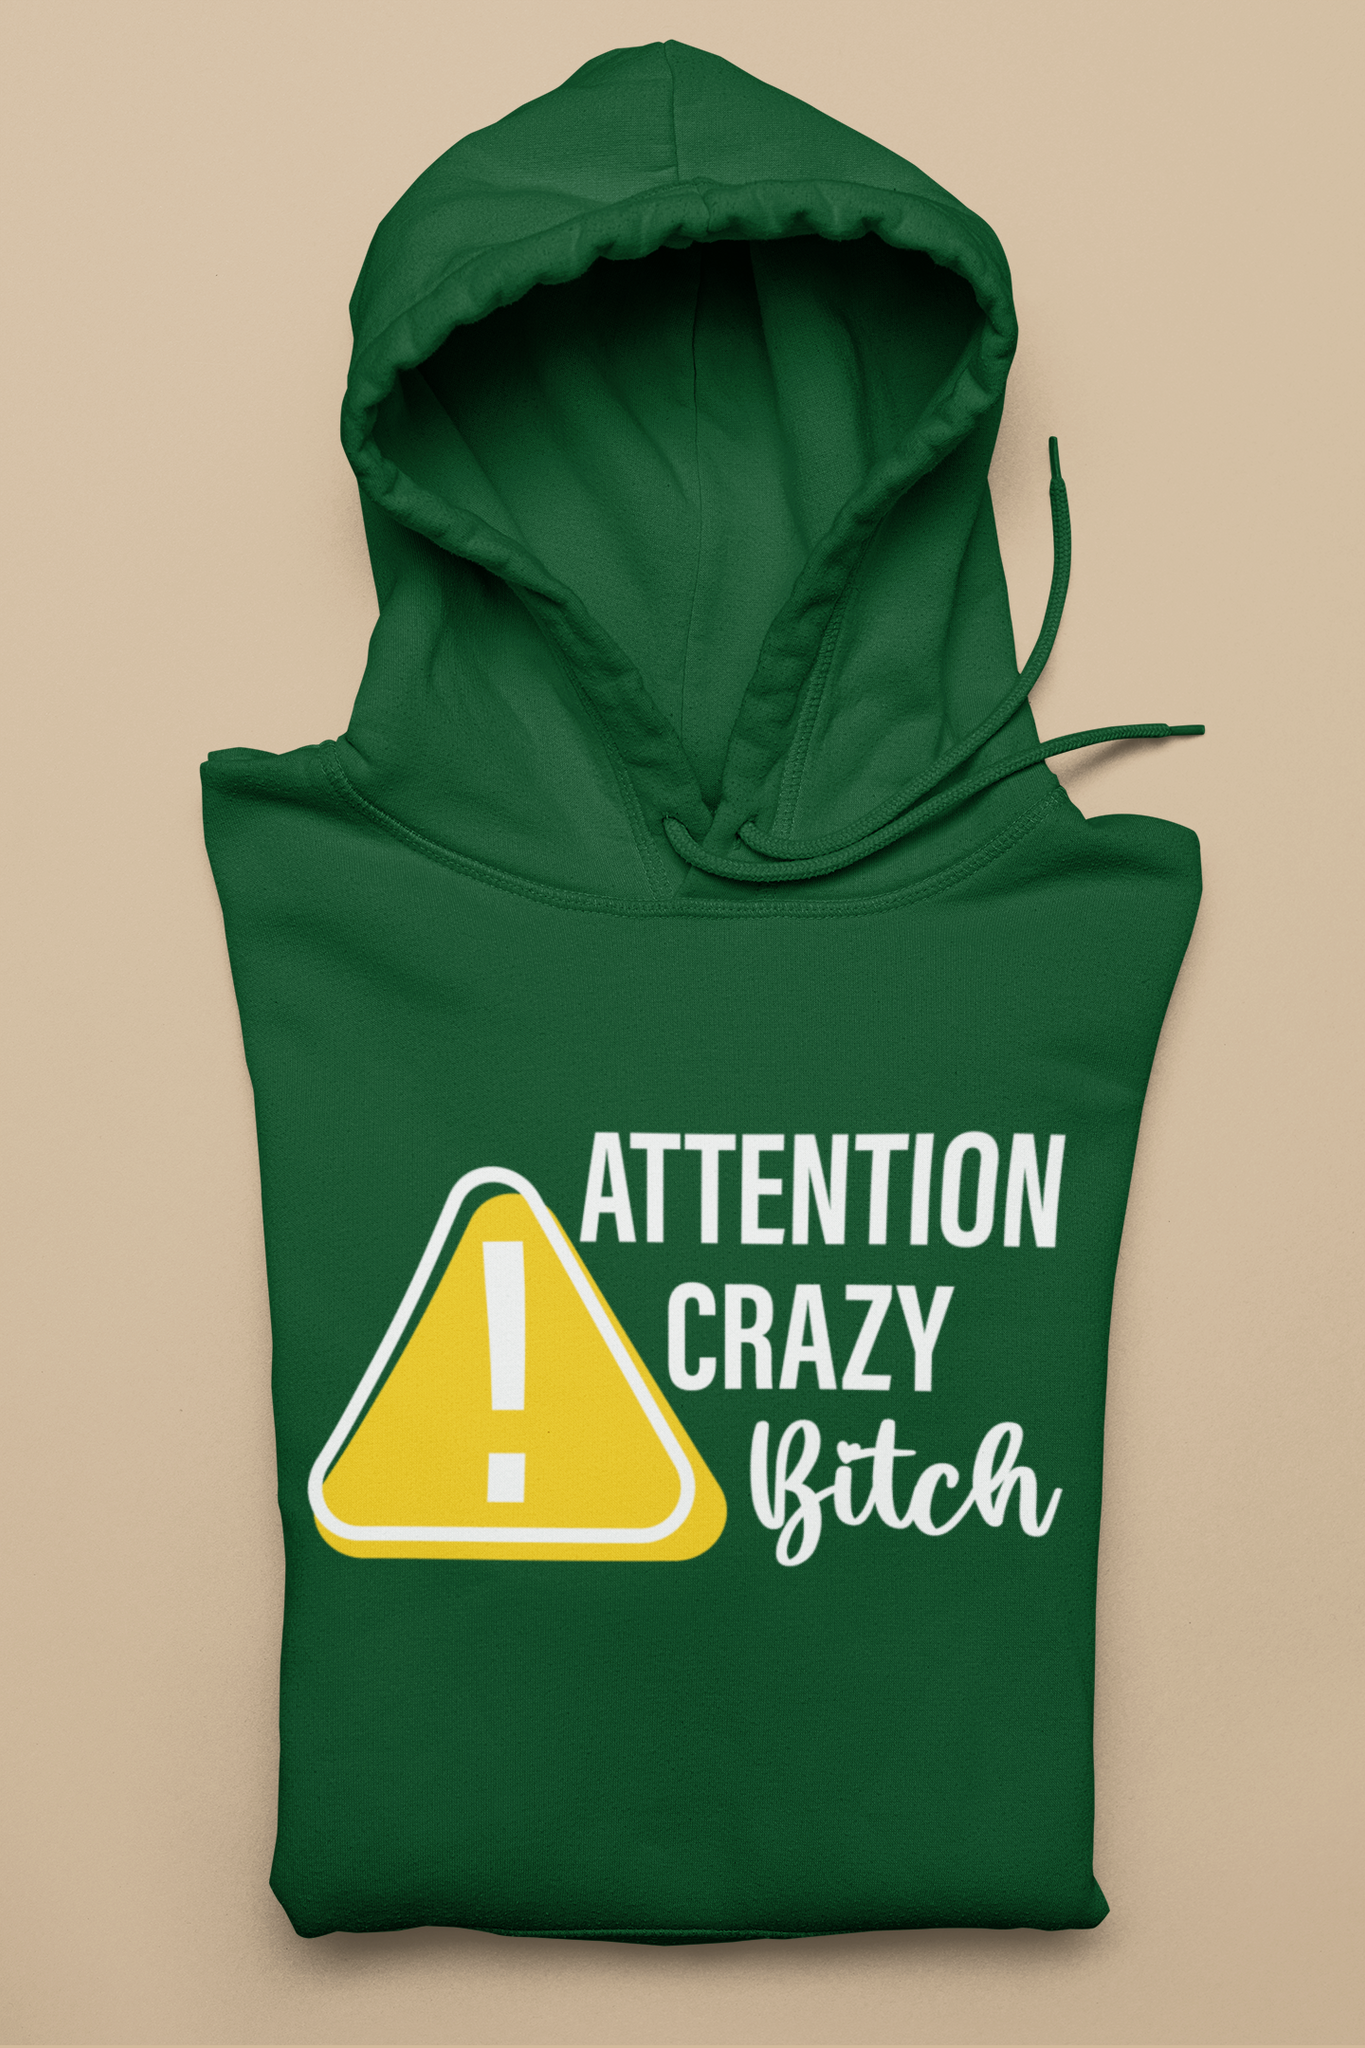 Kangourou - Attention crazy bitch